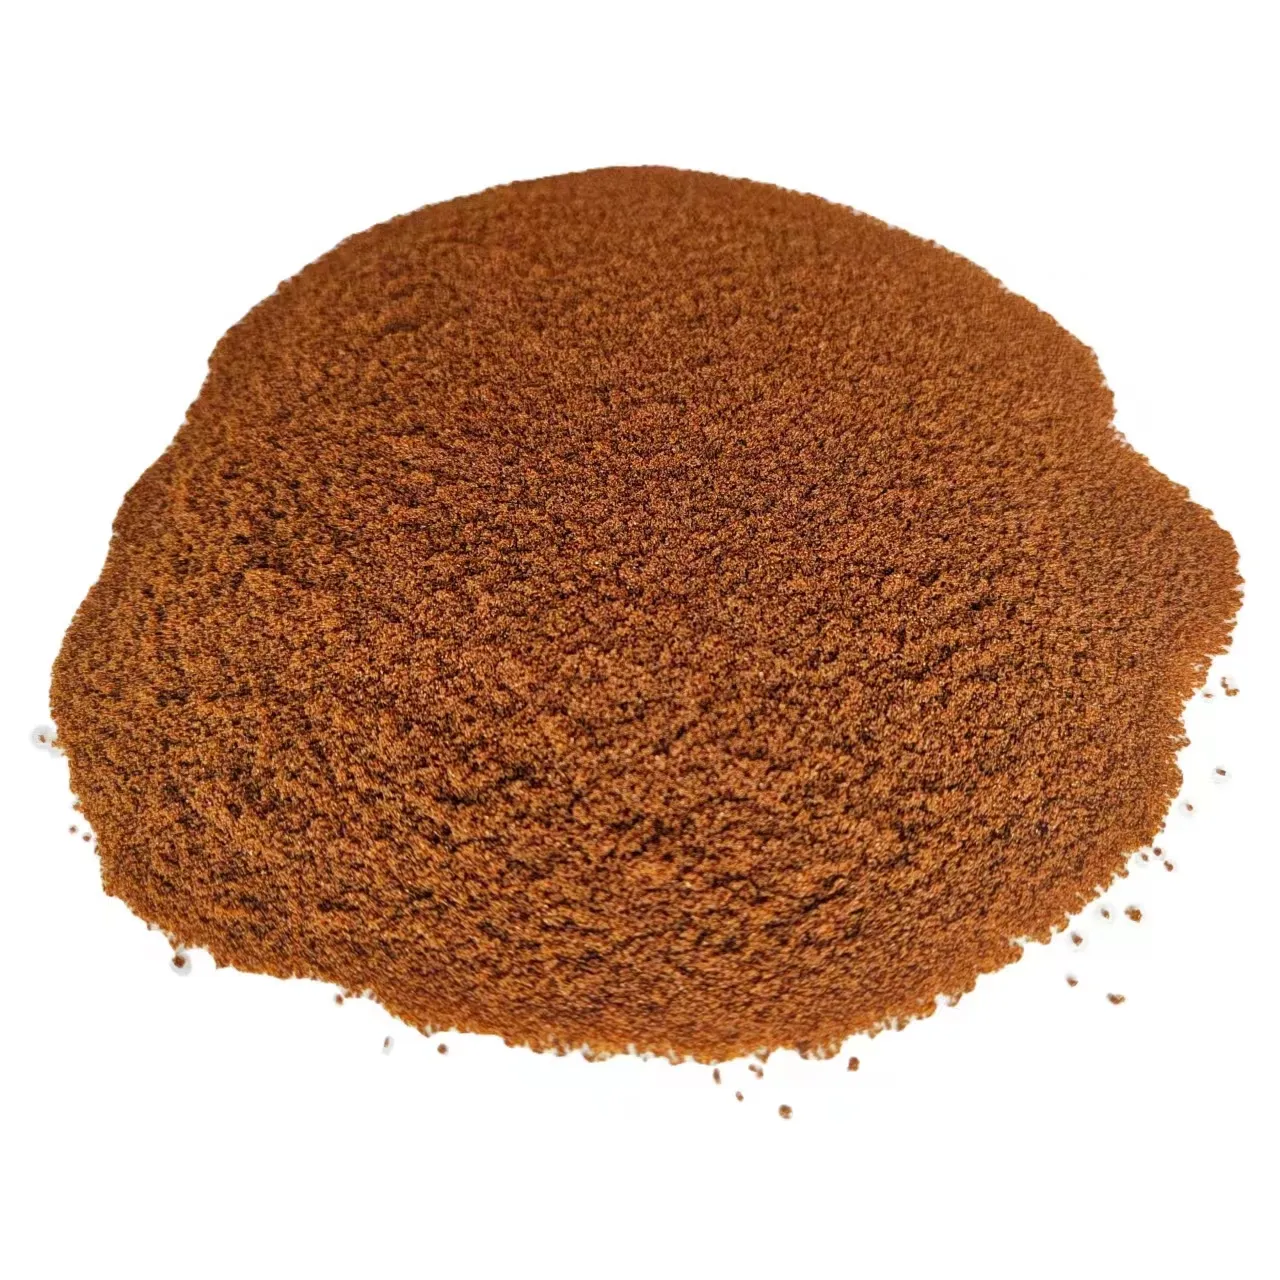 Spray dried instant coffee powder pure coffee powder, instant coffee powder